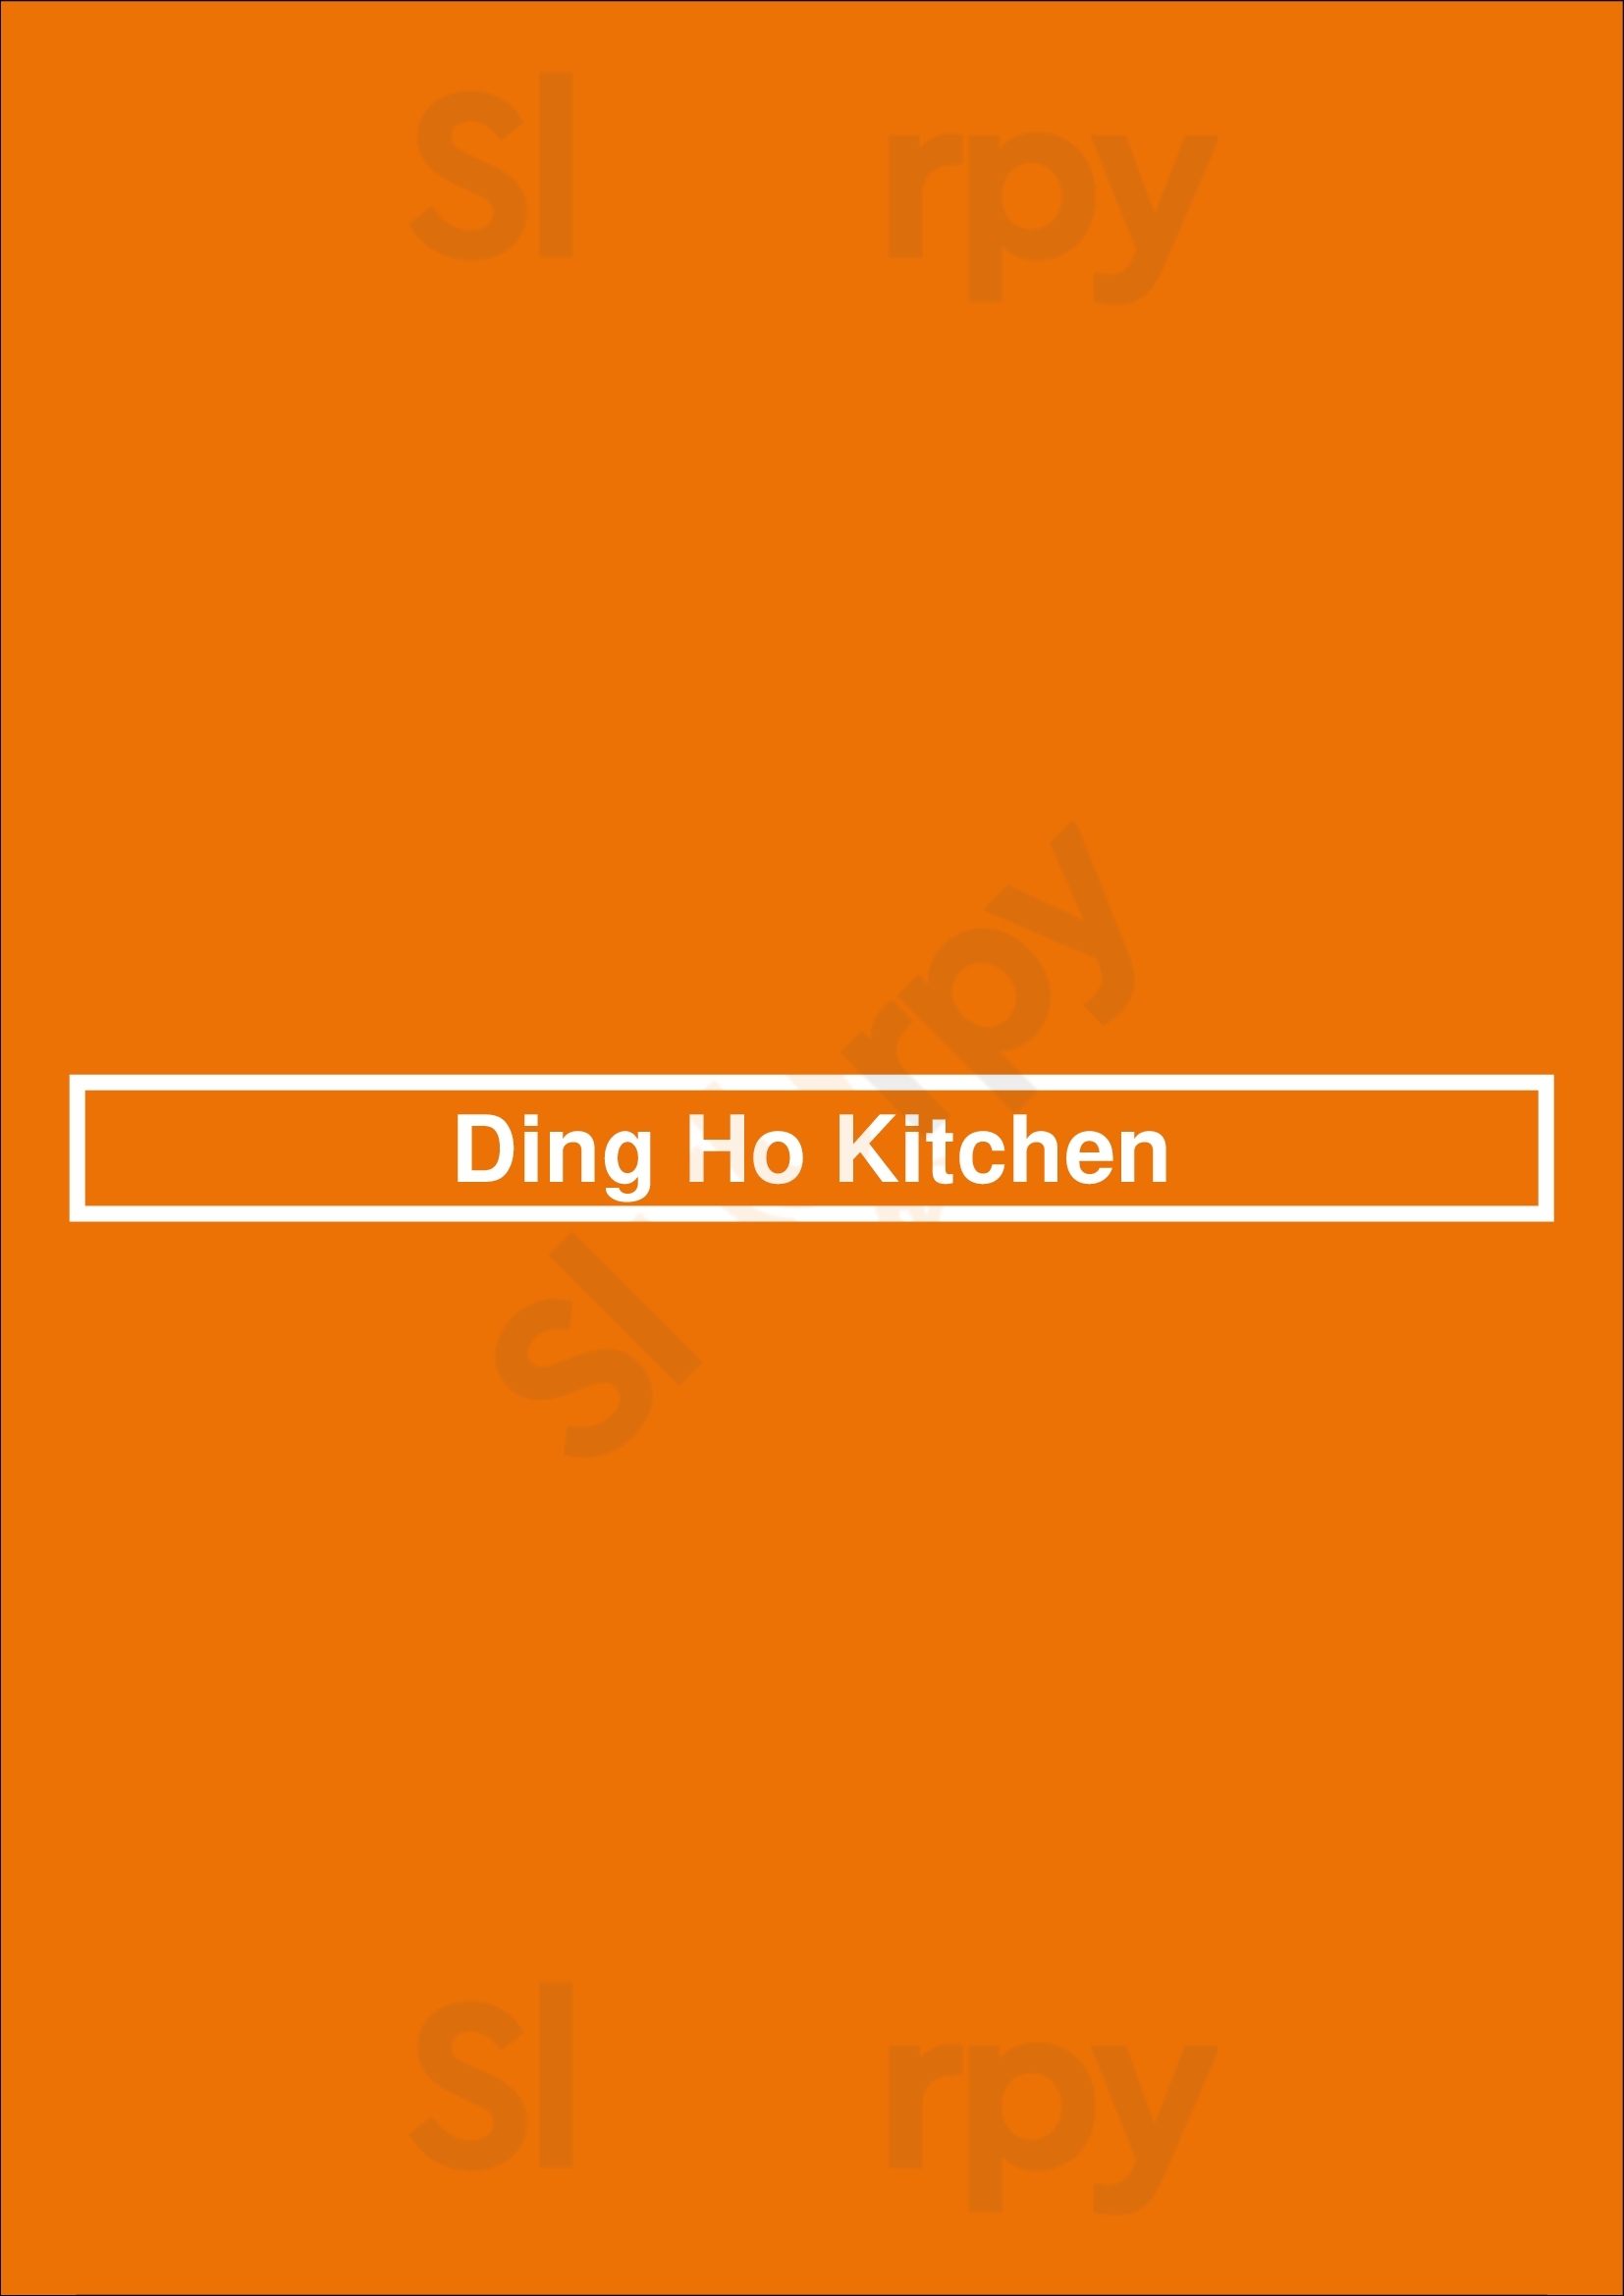 Ding Ho Kitchen Fresno Menu - 1